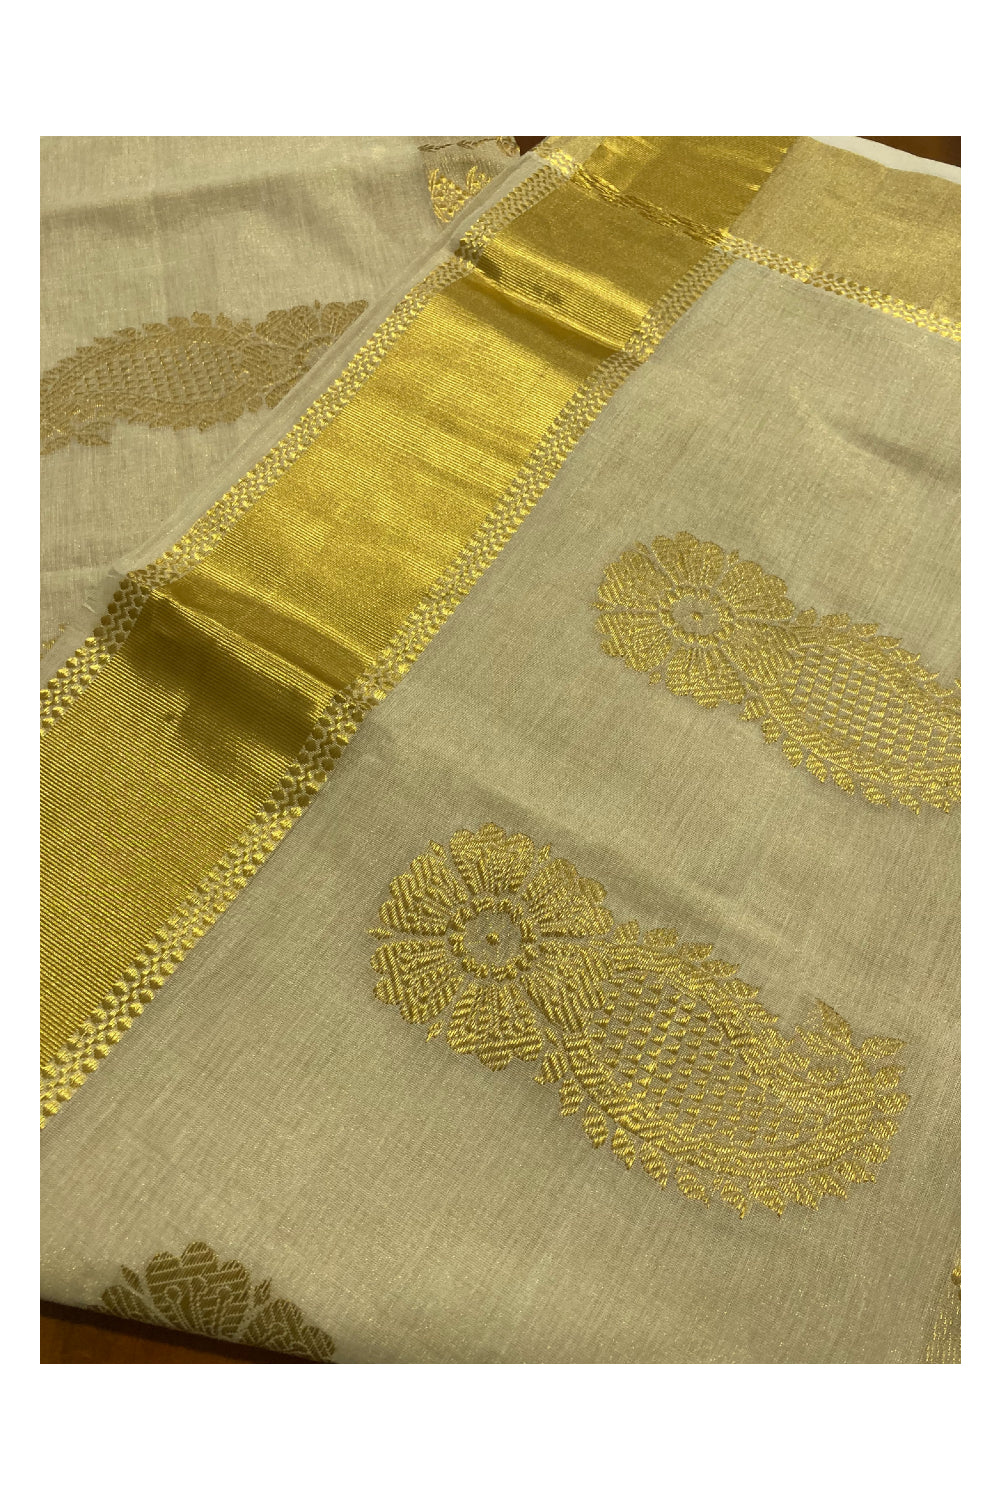 Southloom Balaramapuram Handloom Tissue Heavy Work Saree with Paisley Design